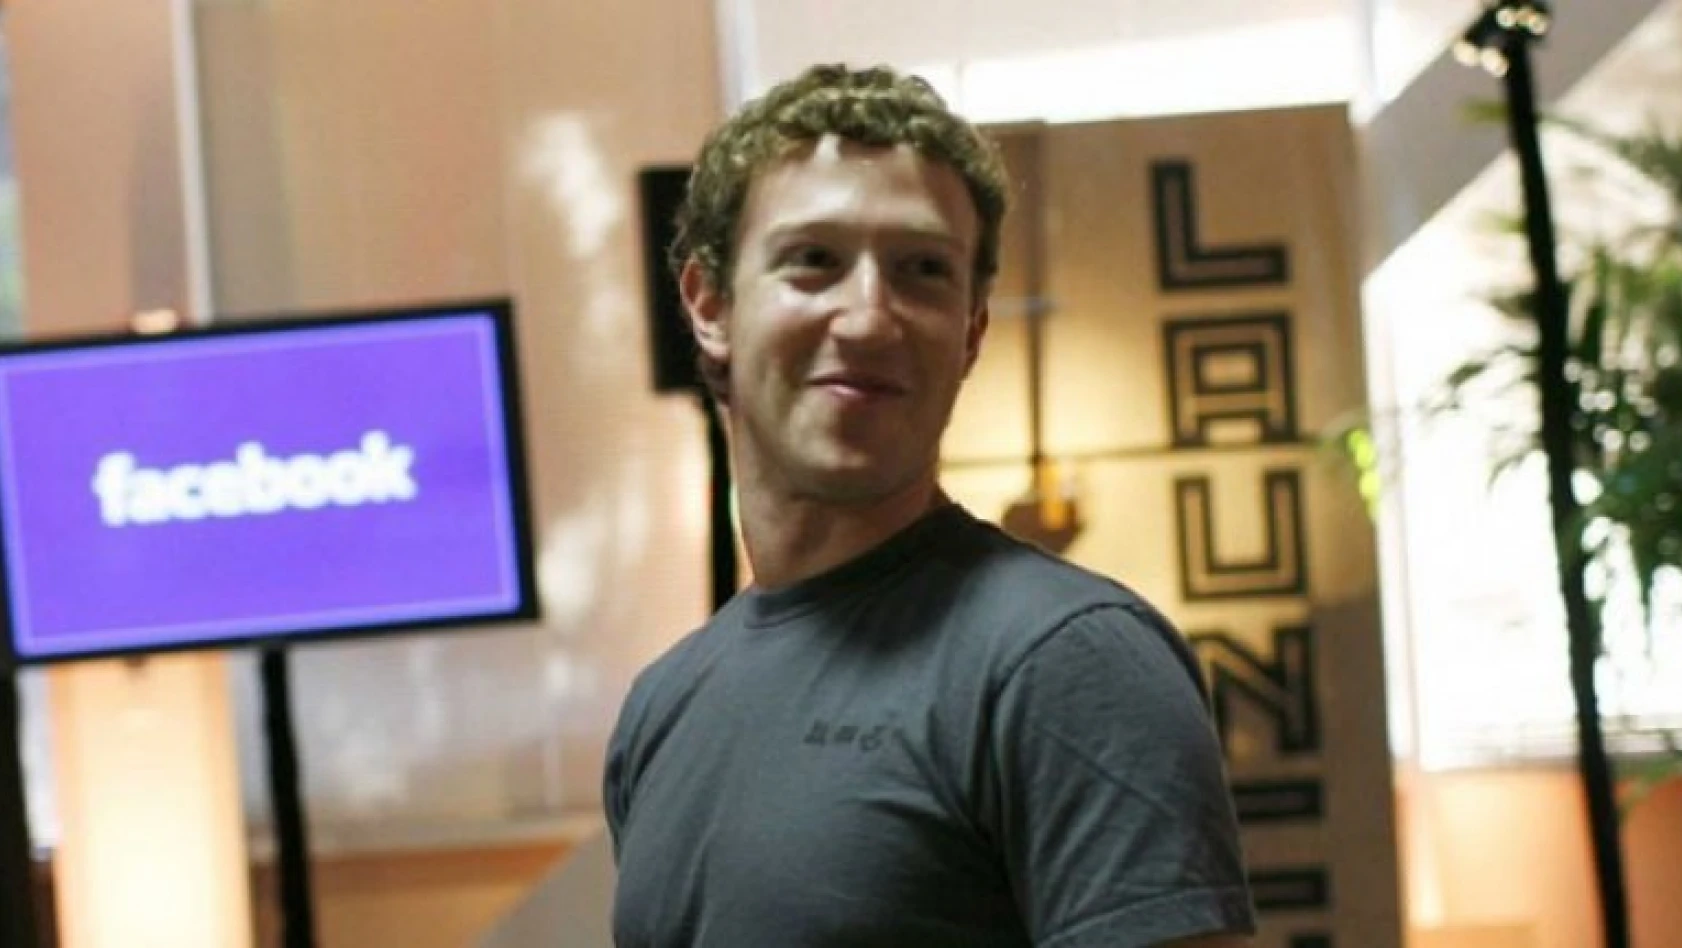 Facebook'un kurucusu Zuckerberg'den flaş itiraf!